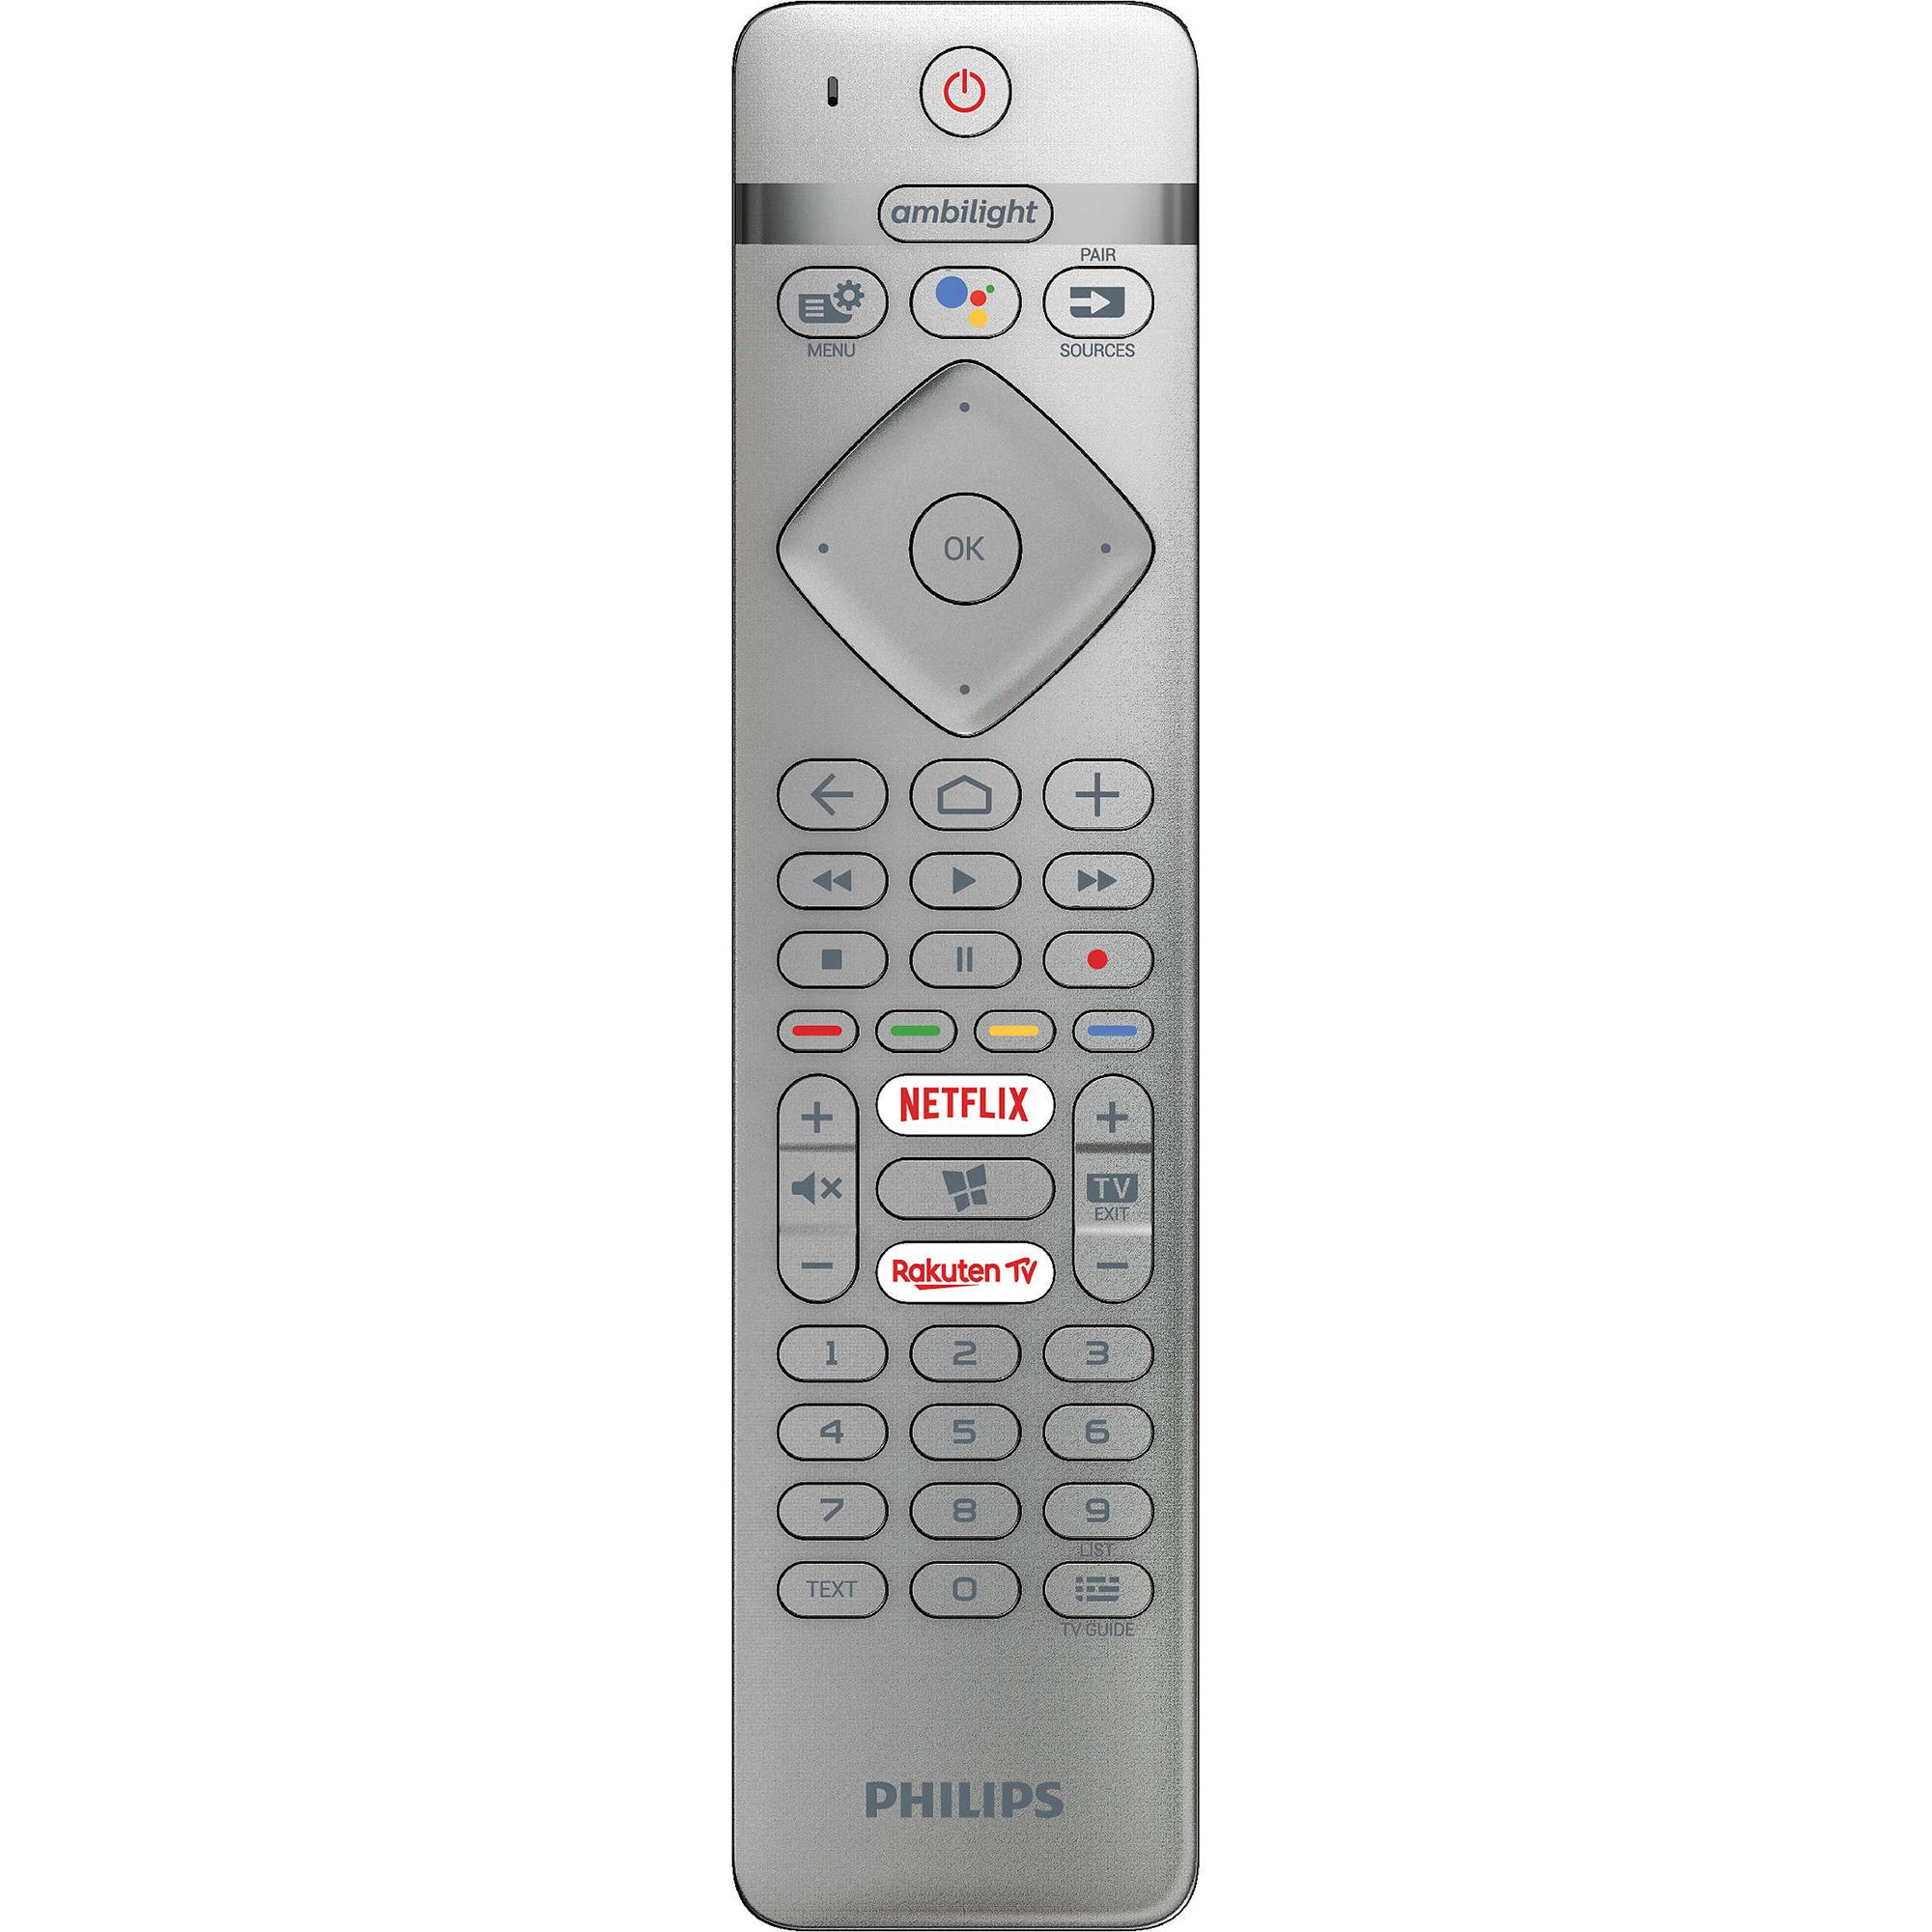 Телевизор philips серый. Пульт Philips rc996590009443. Филипс телевизор 50 пульт. Пульт для телевизора Philips rc4344-01h. Пульт Philips 398gm.